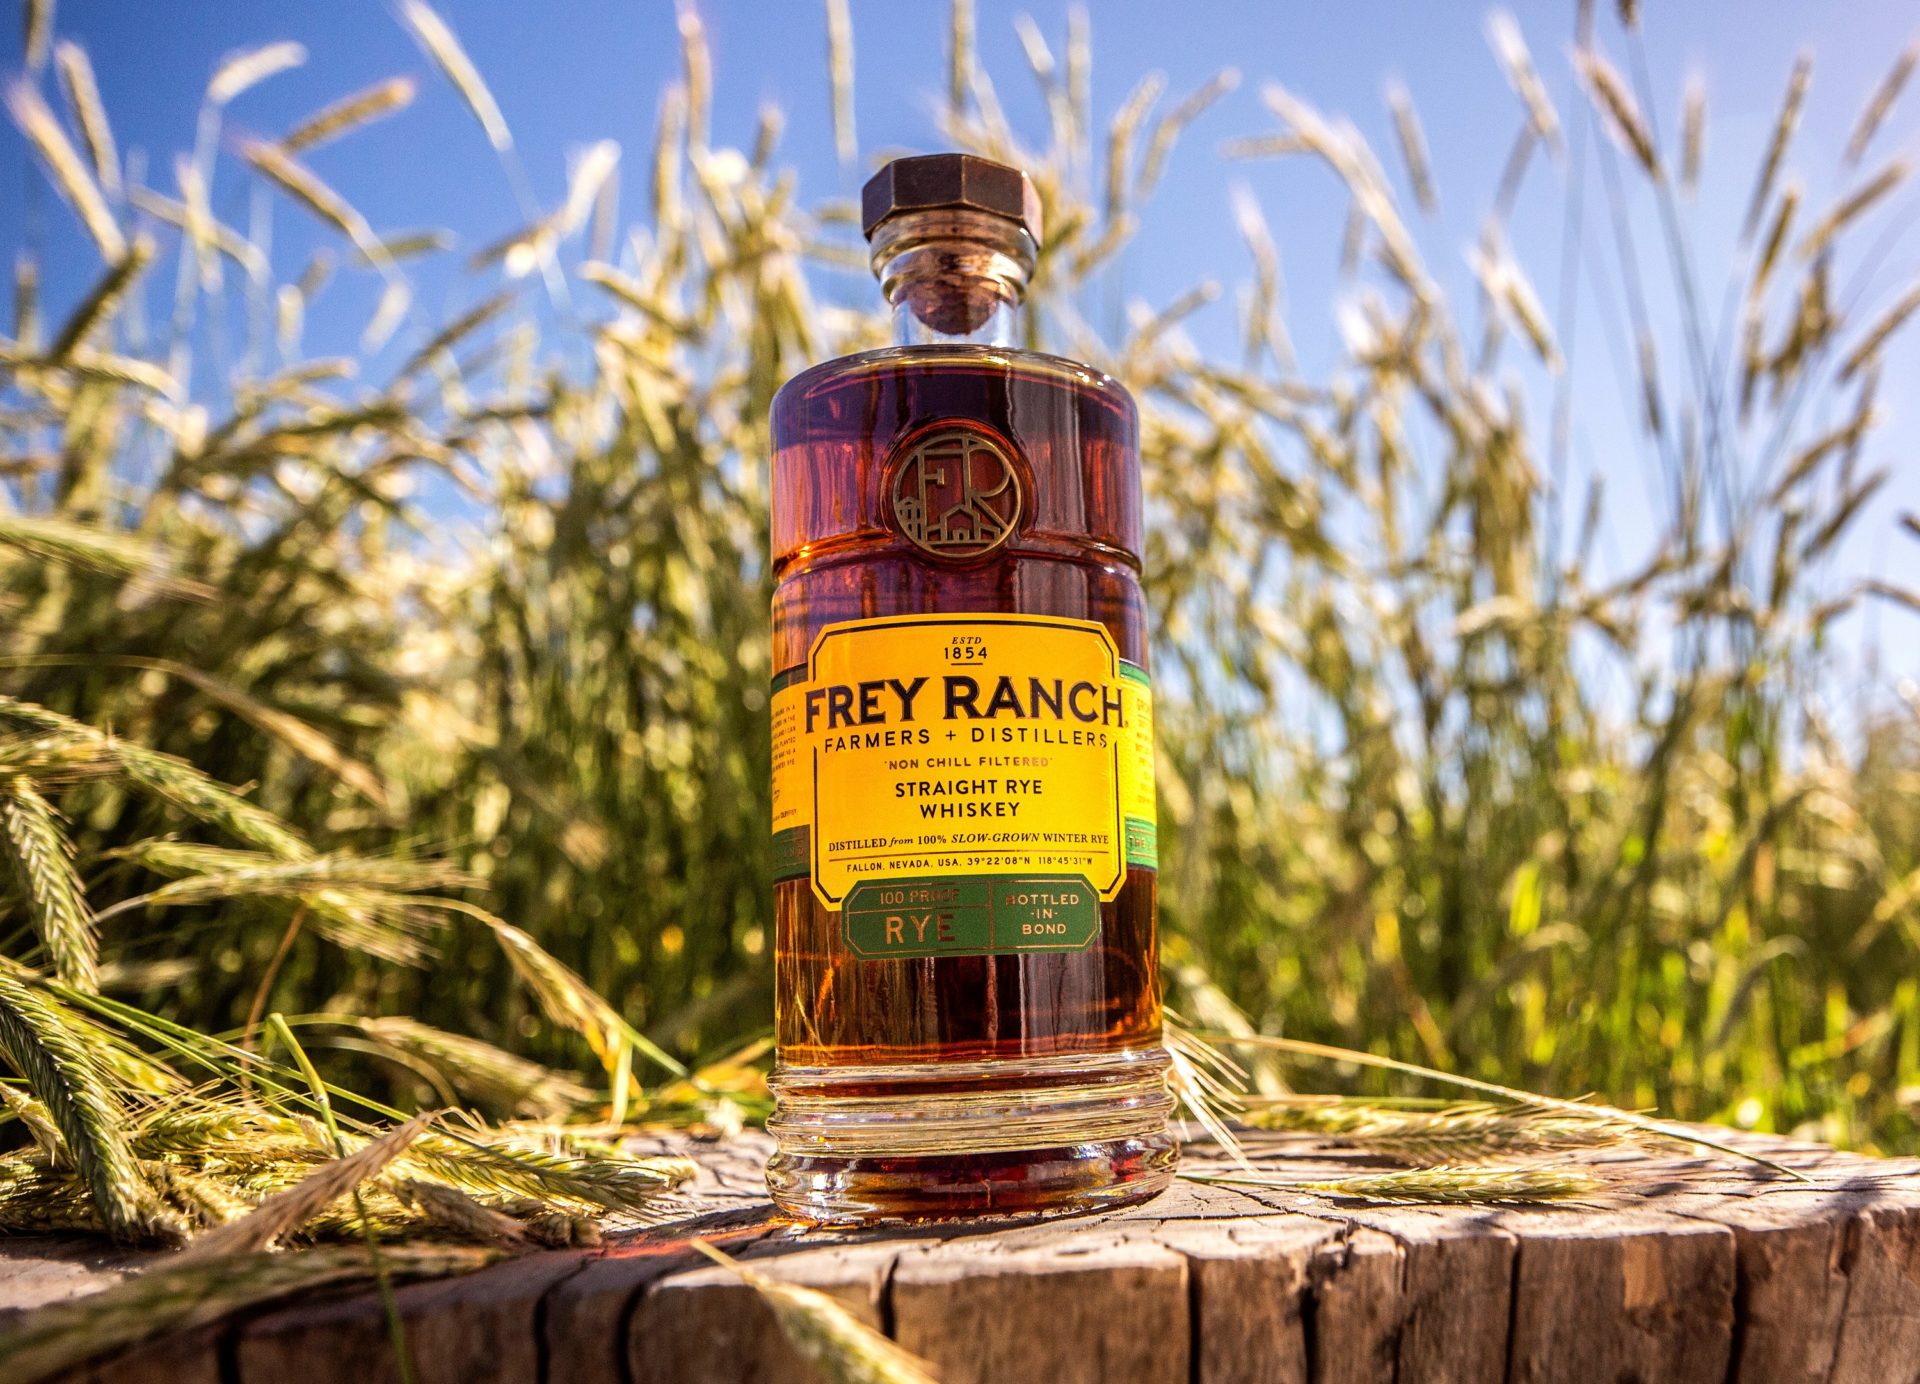 Shop Award-Winning Farm to Glass Whiskey – Frey Ranch